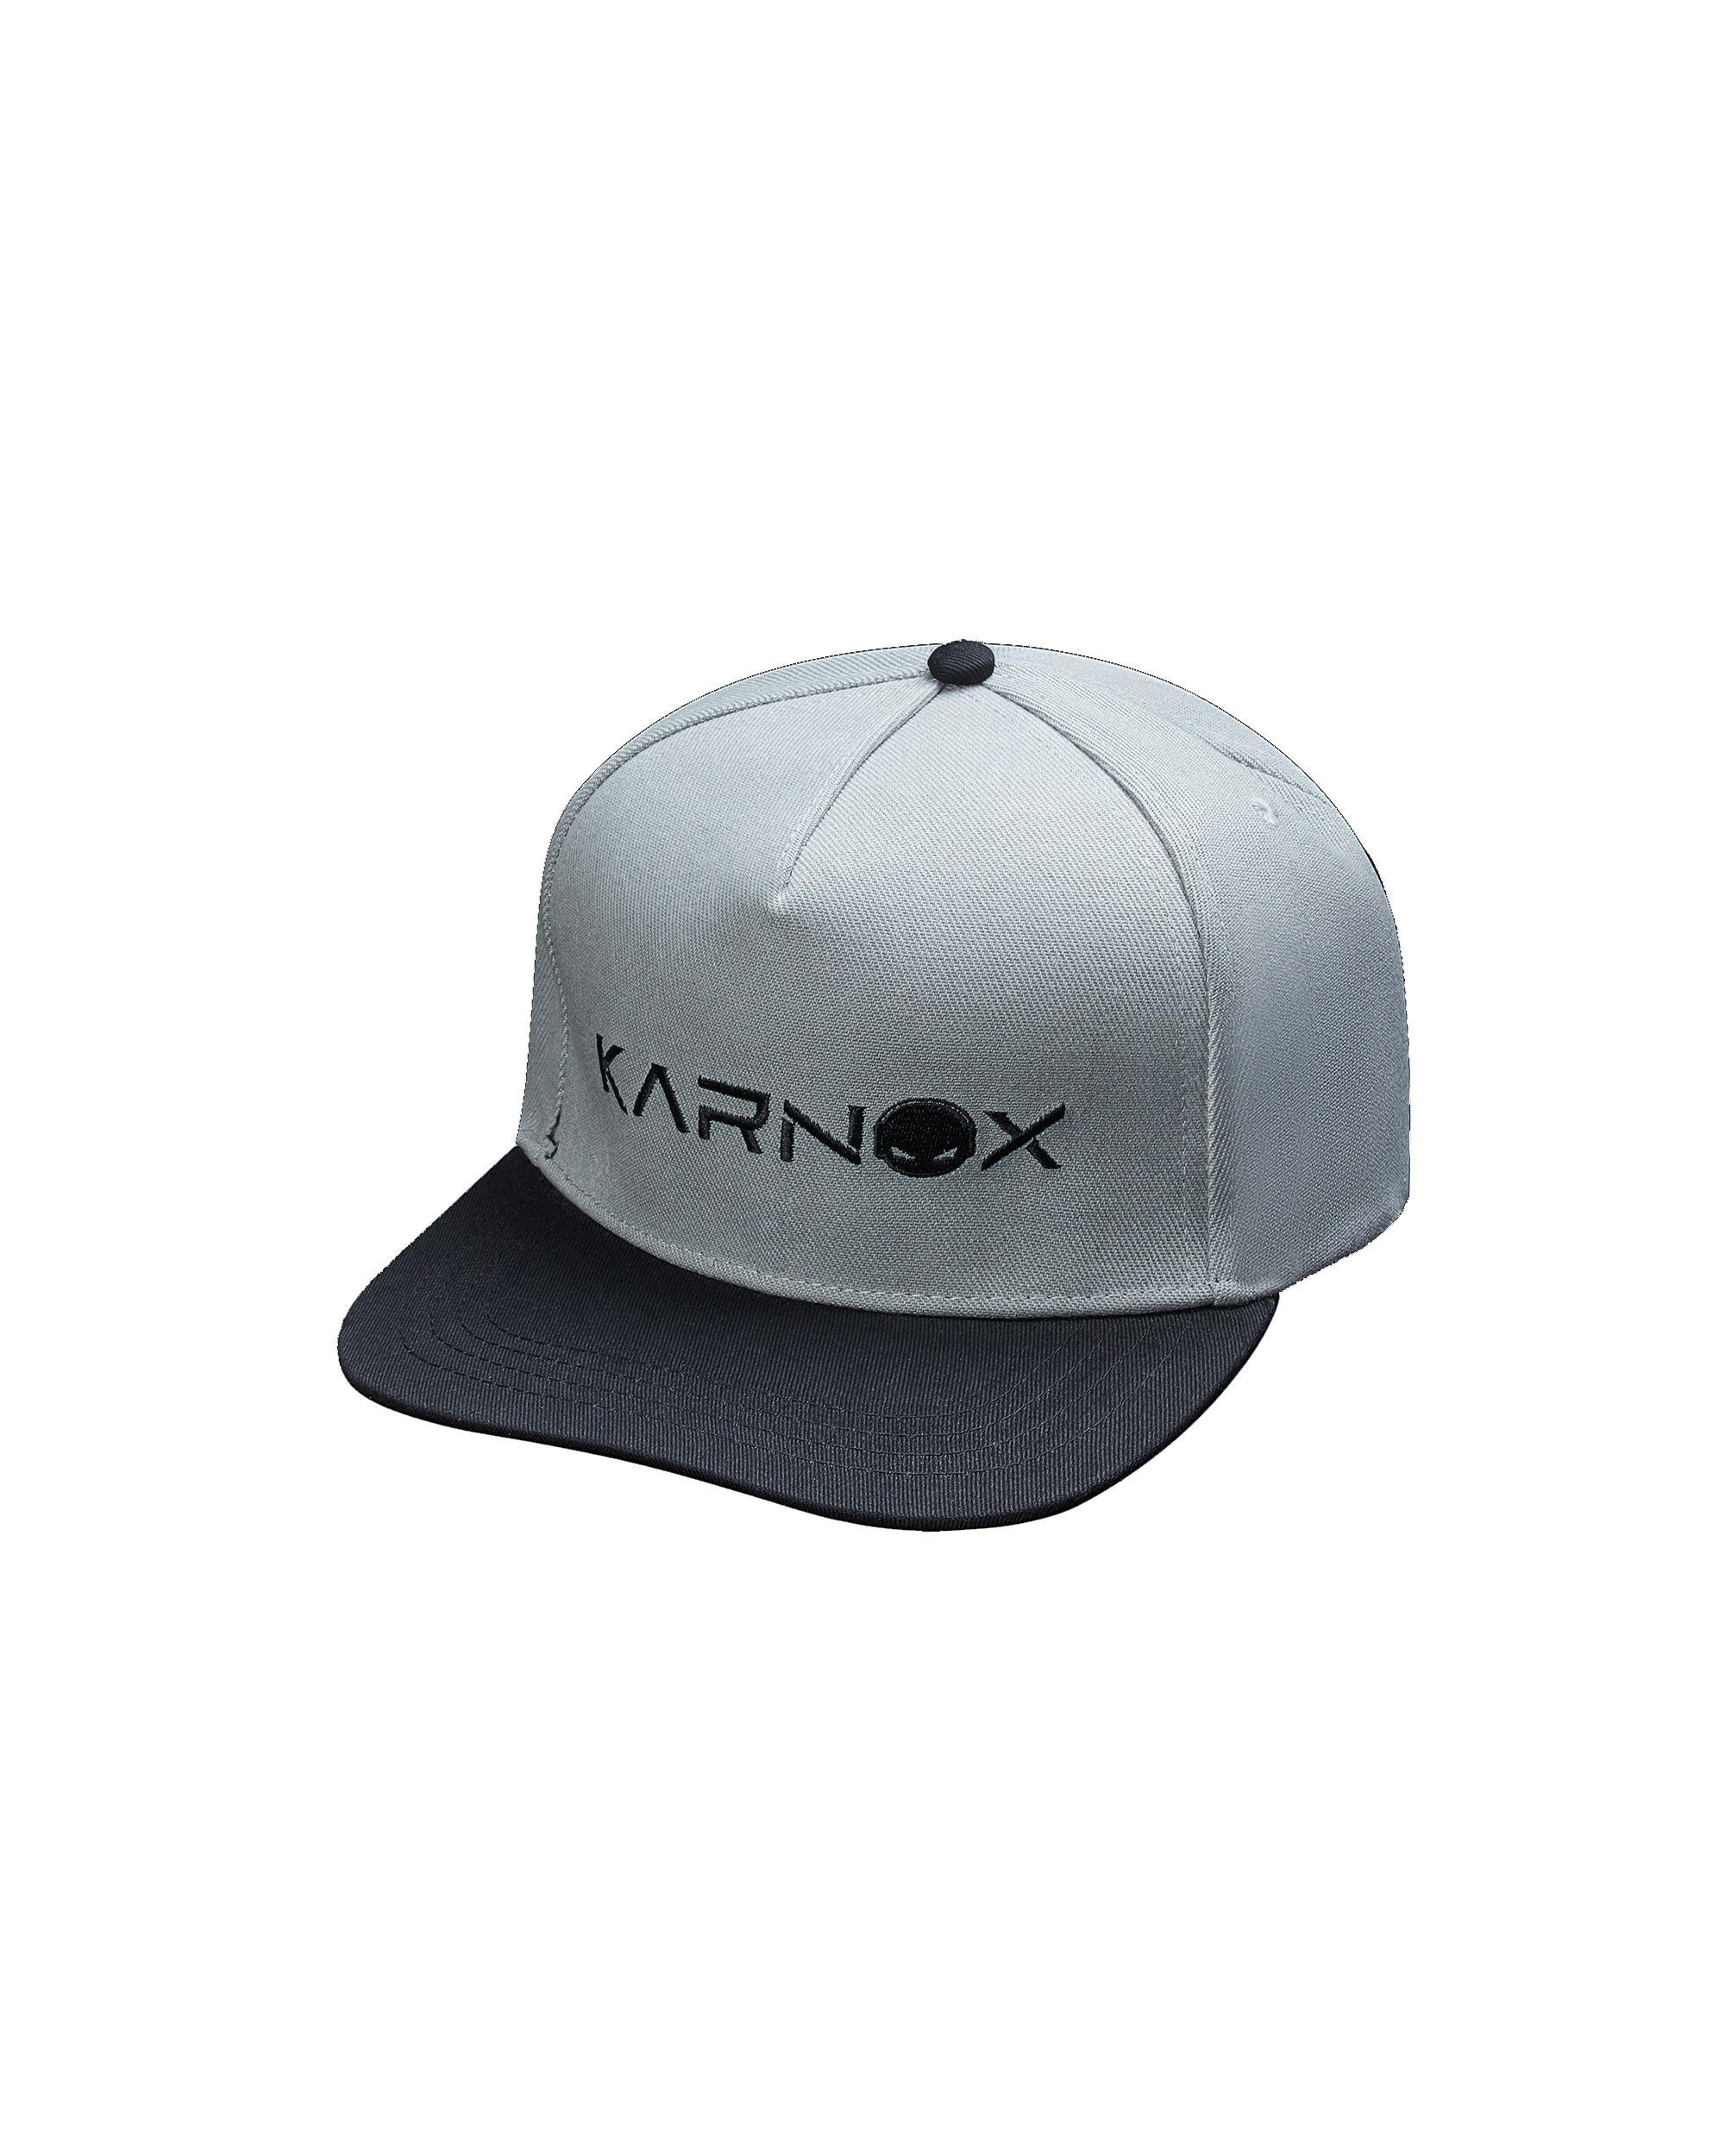 Karnox Snapback Hat / Grey